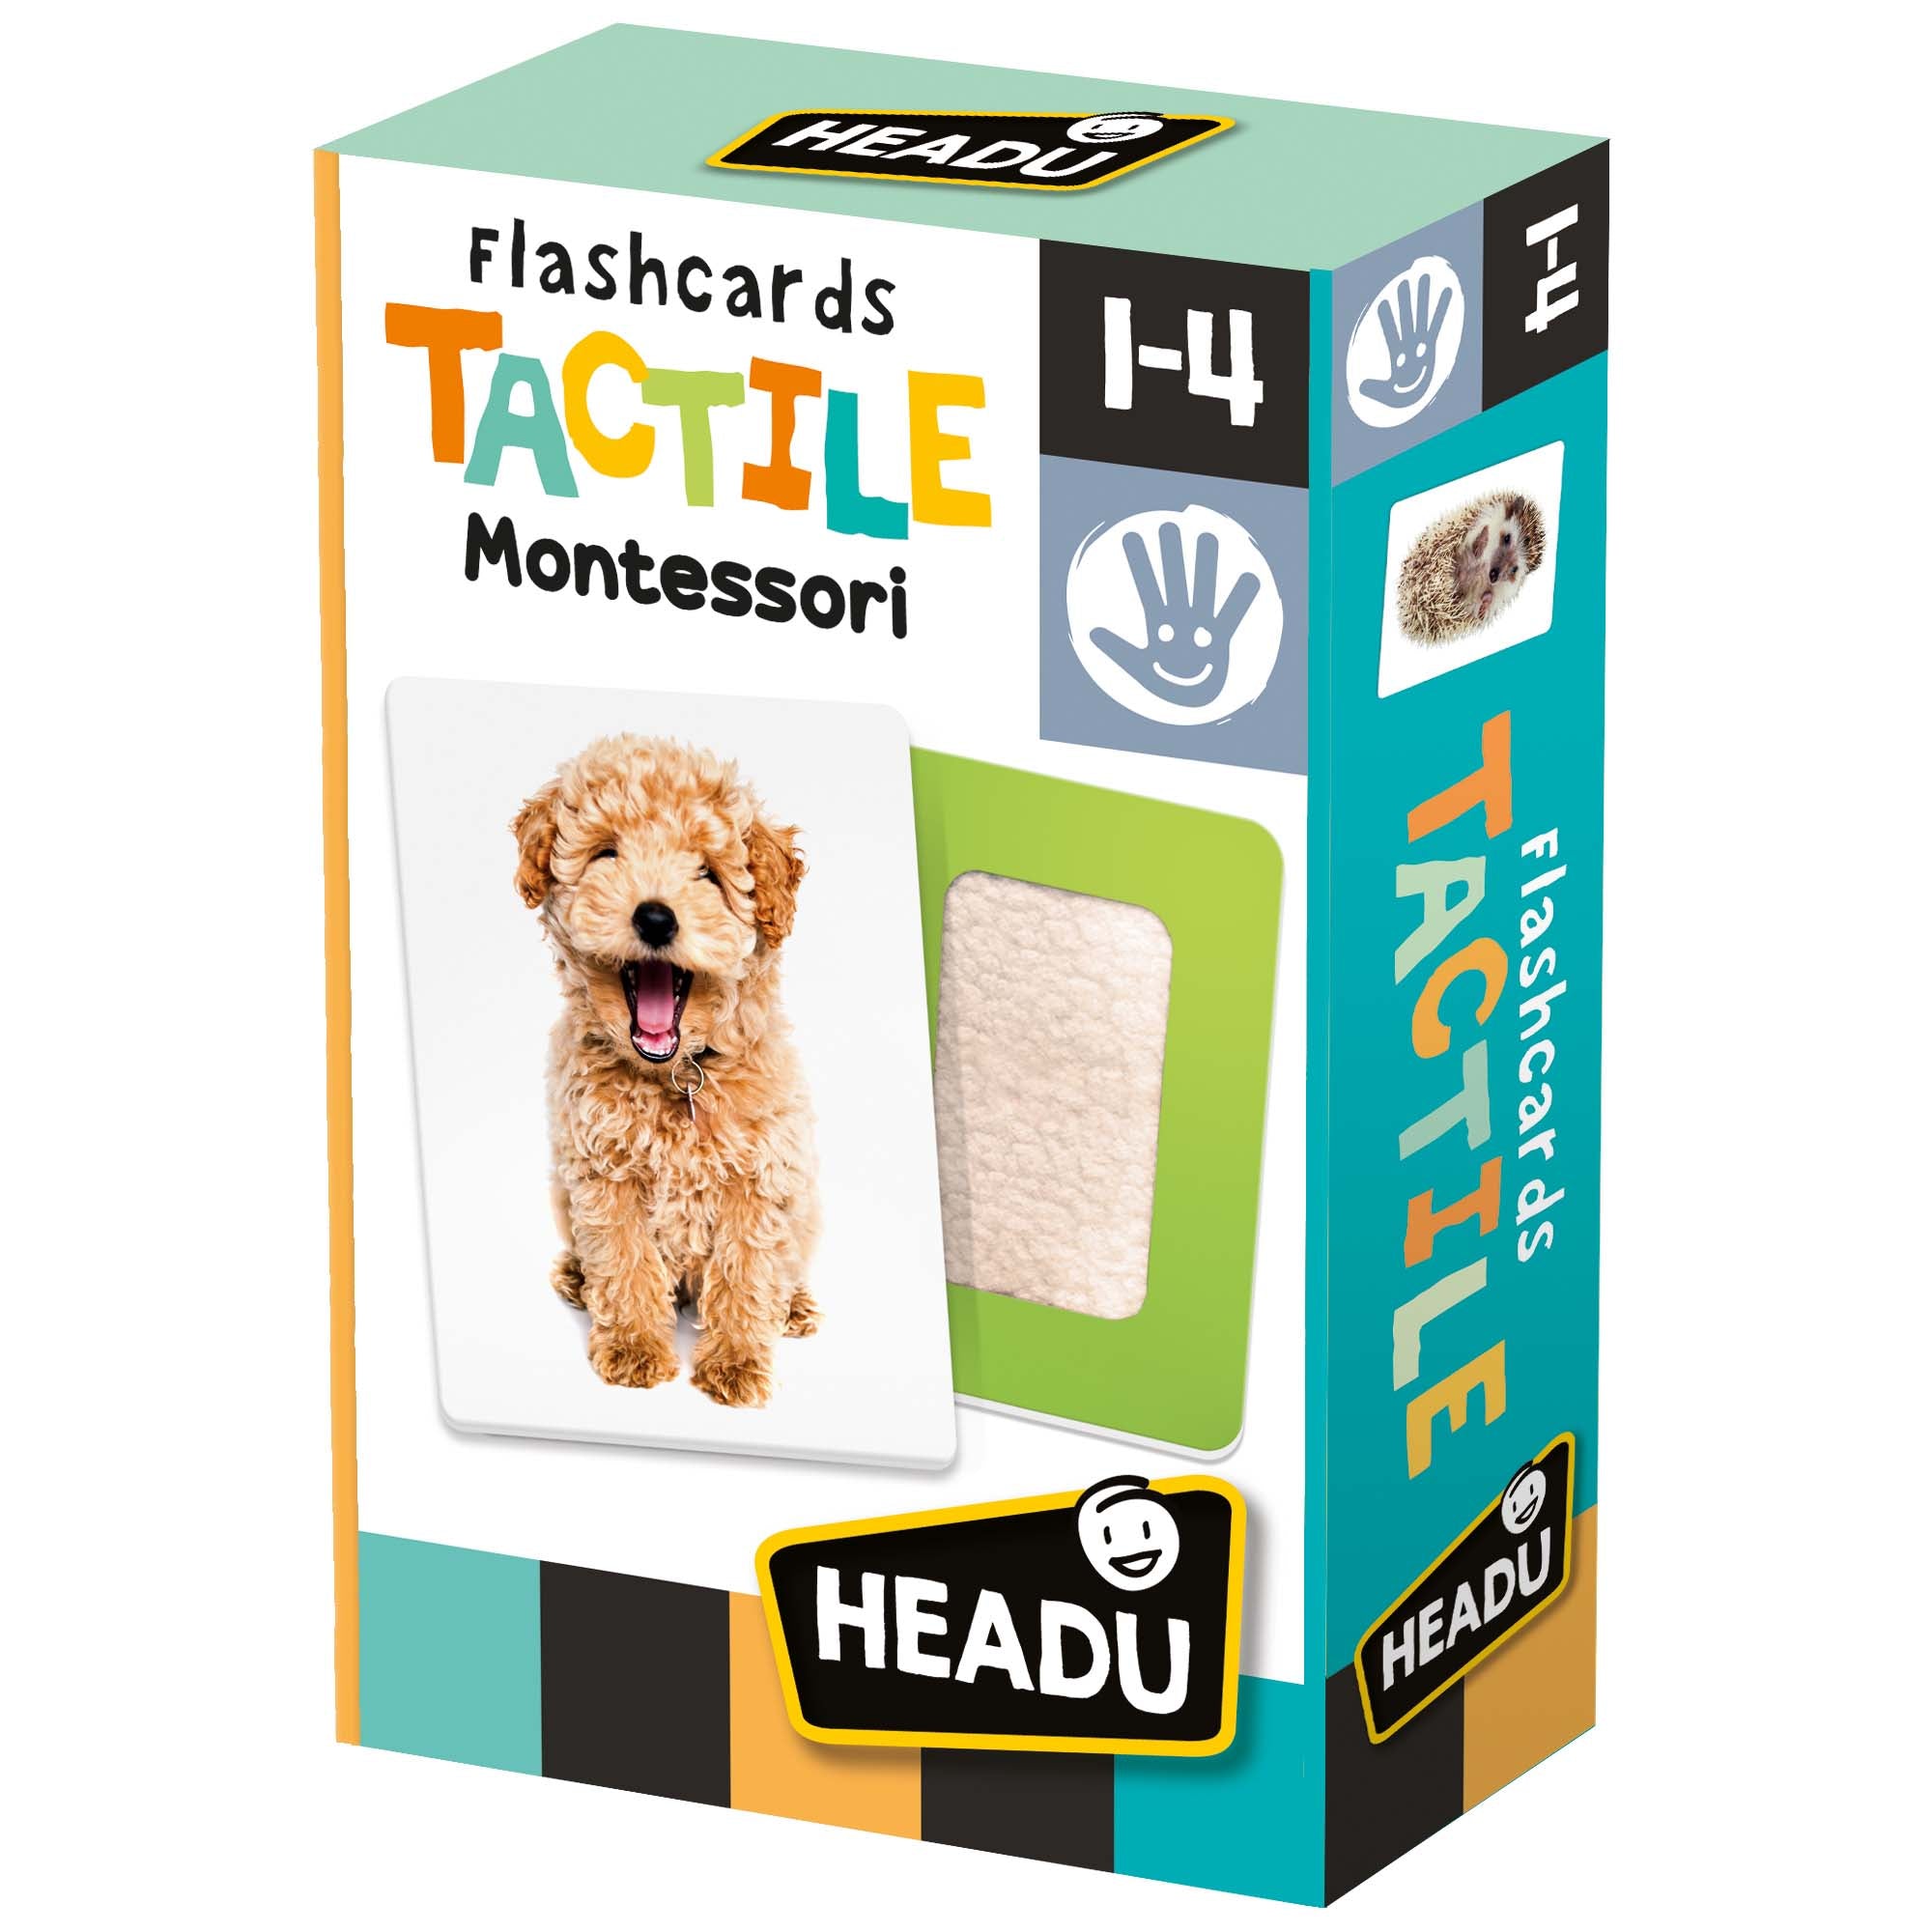 Headu - Flashcards Tactile Montessori (MU23738)